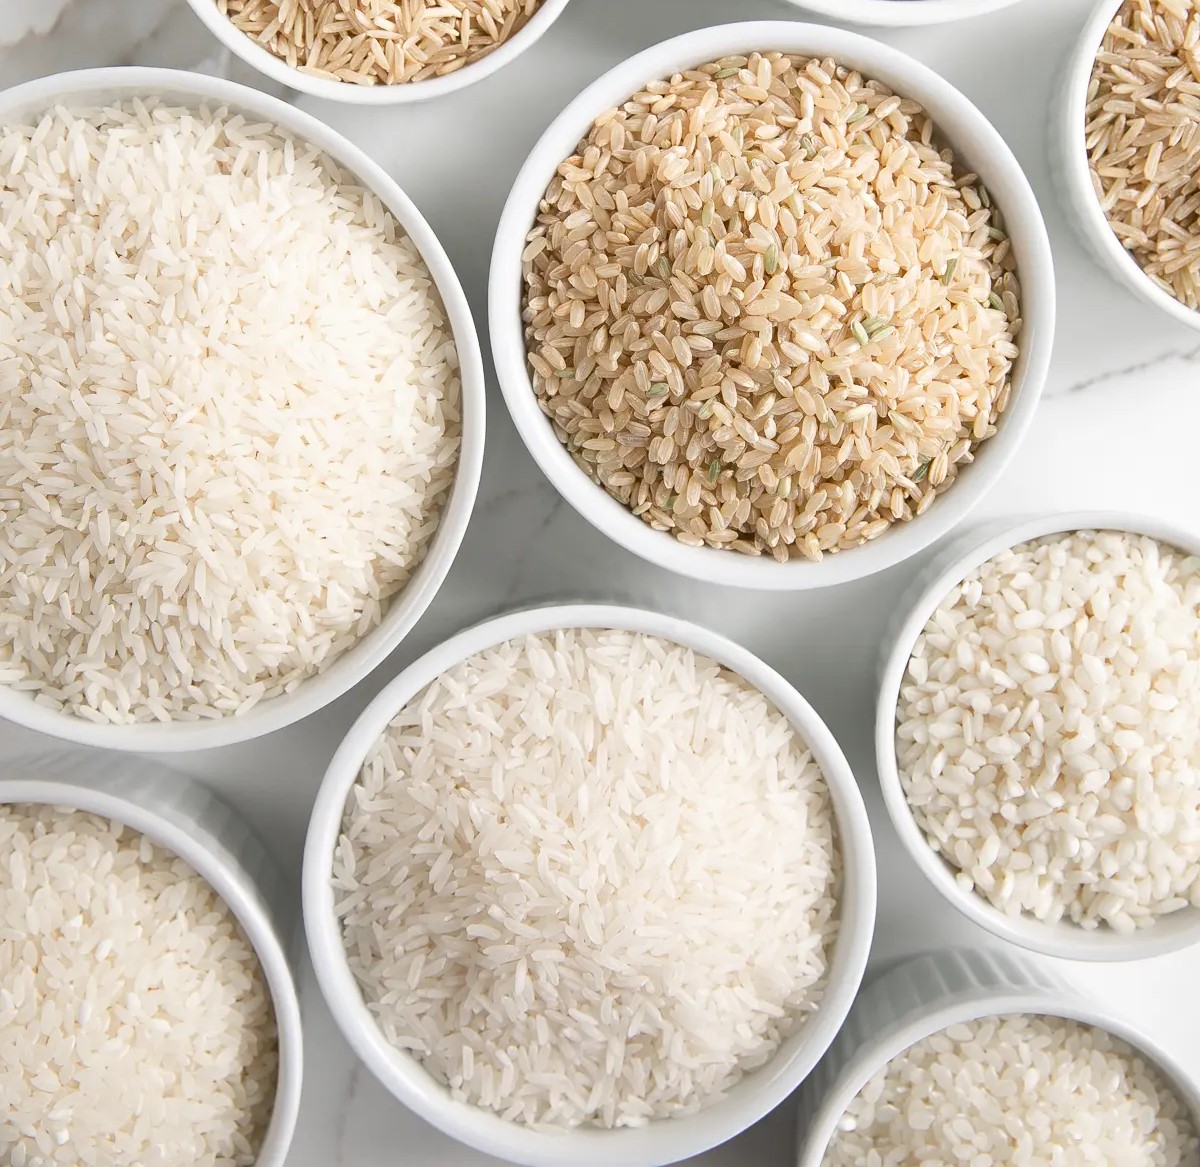 فرق برنج طارم با دیگر برنج ها